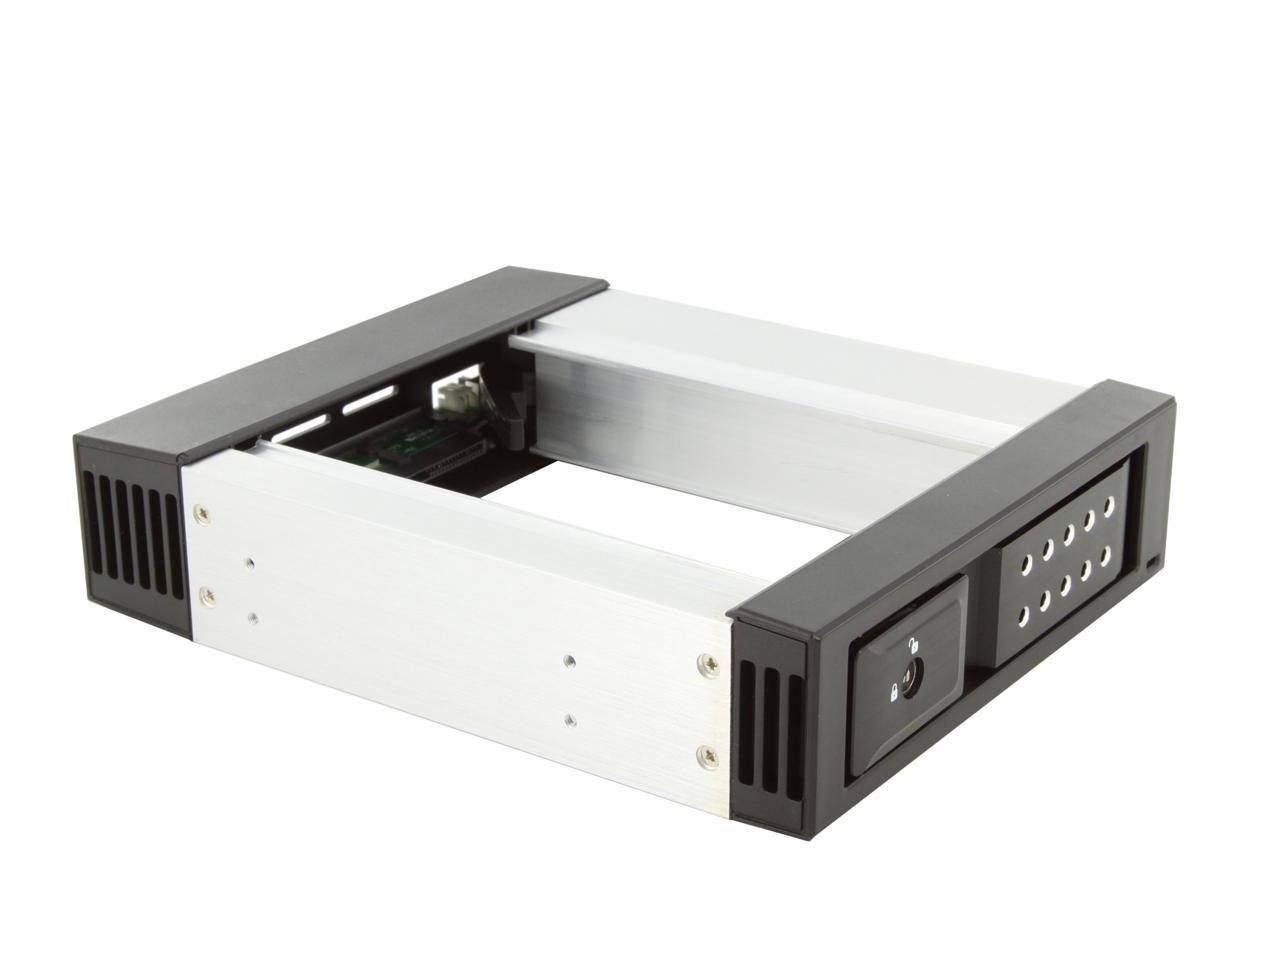 iStarUSA T-C25HD-G Custom Size 2.5 HDD Rack Tray Metal